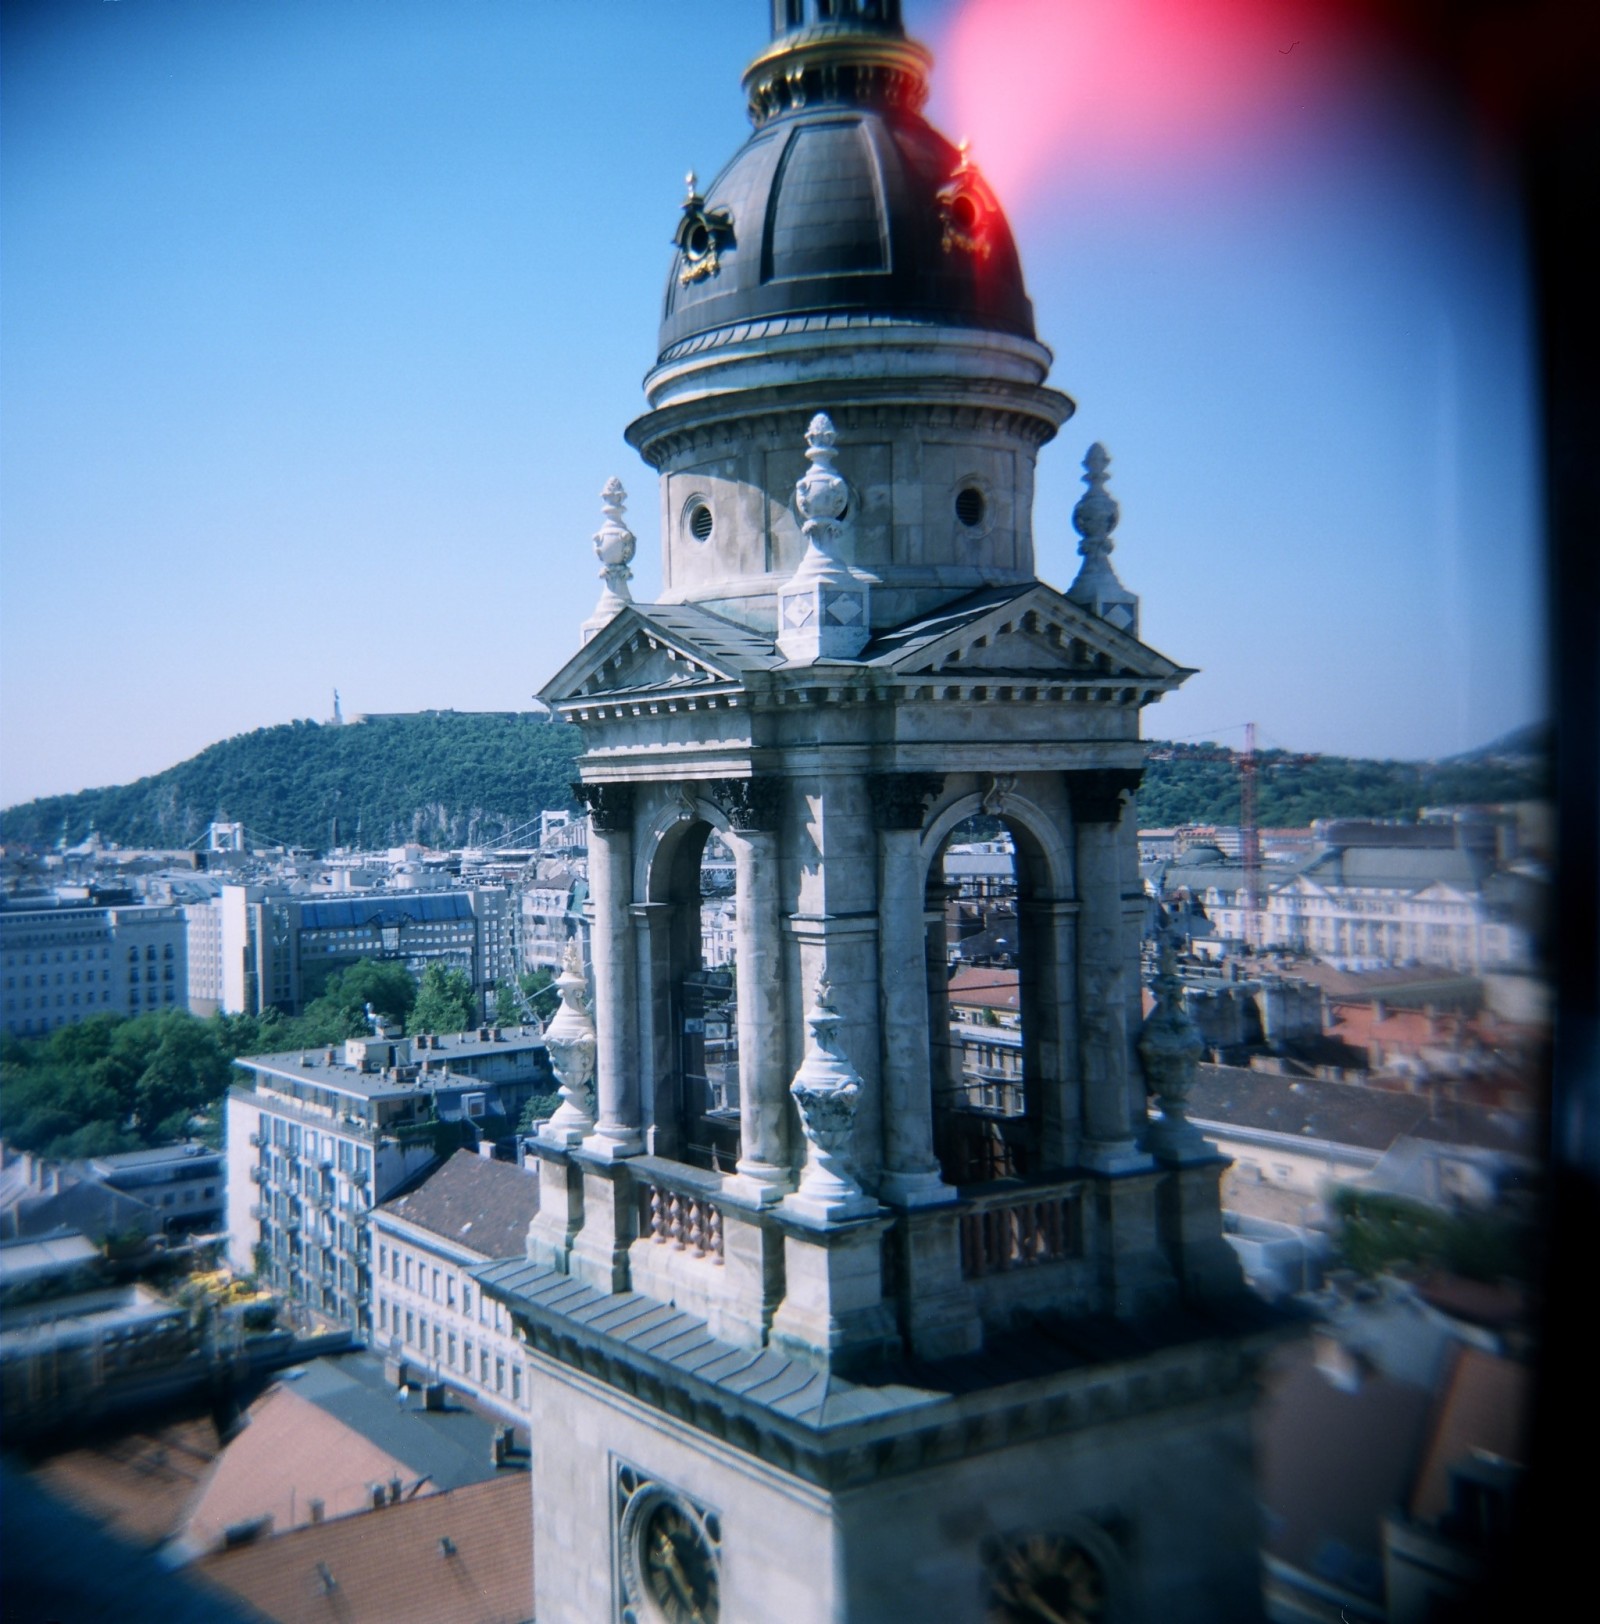 St. Stephen's Basilica, Budapest. Taken with a Holga 120N on 120 colour film.